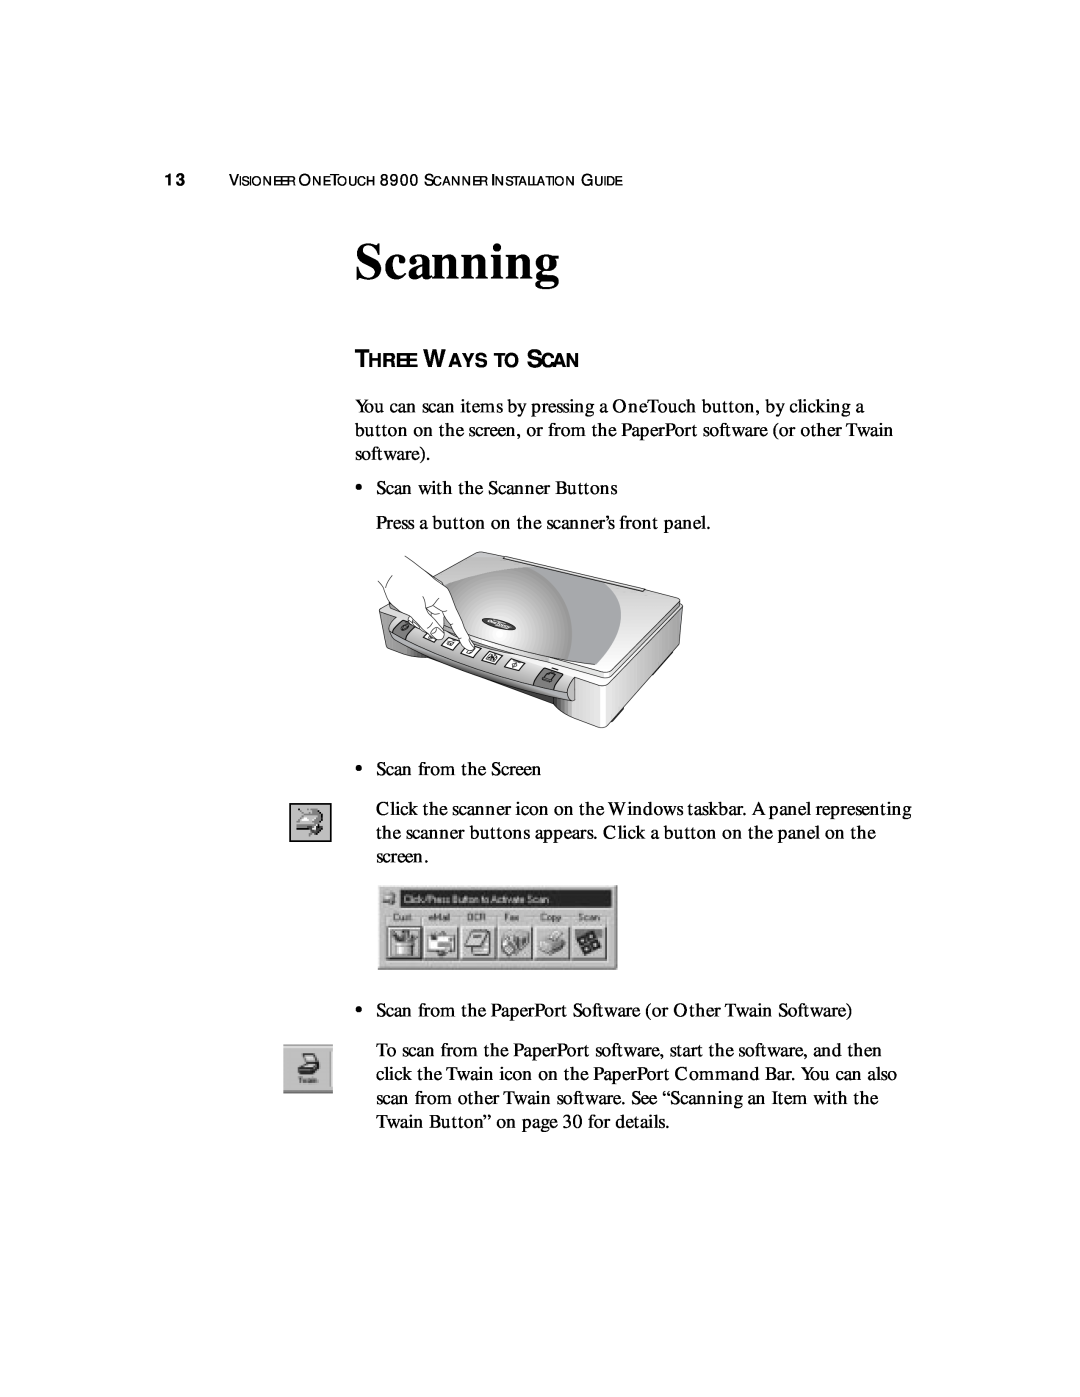 Visioneer 8900 manual Scanning, Three Ways To Scan 